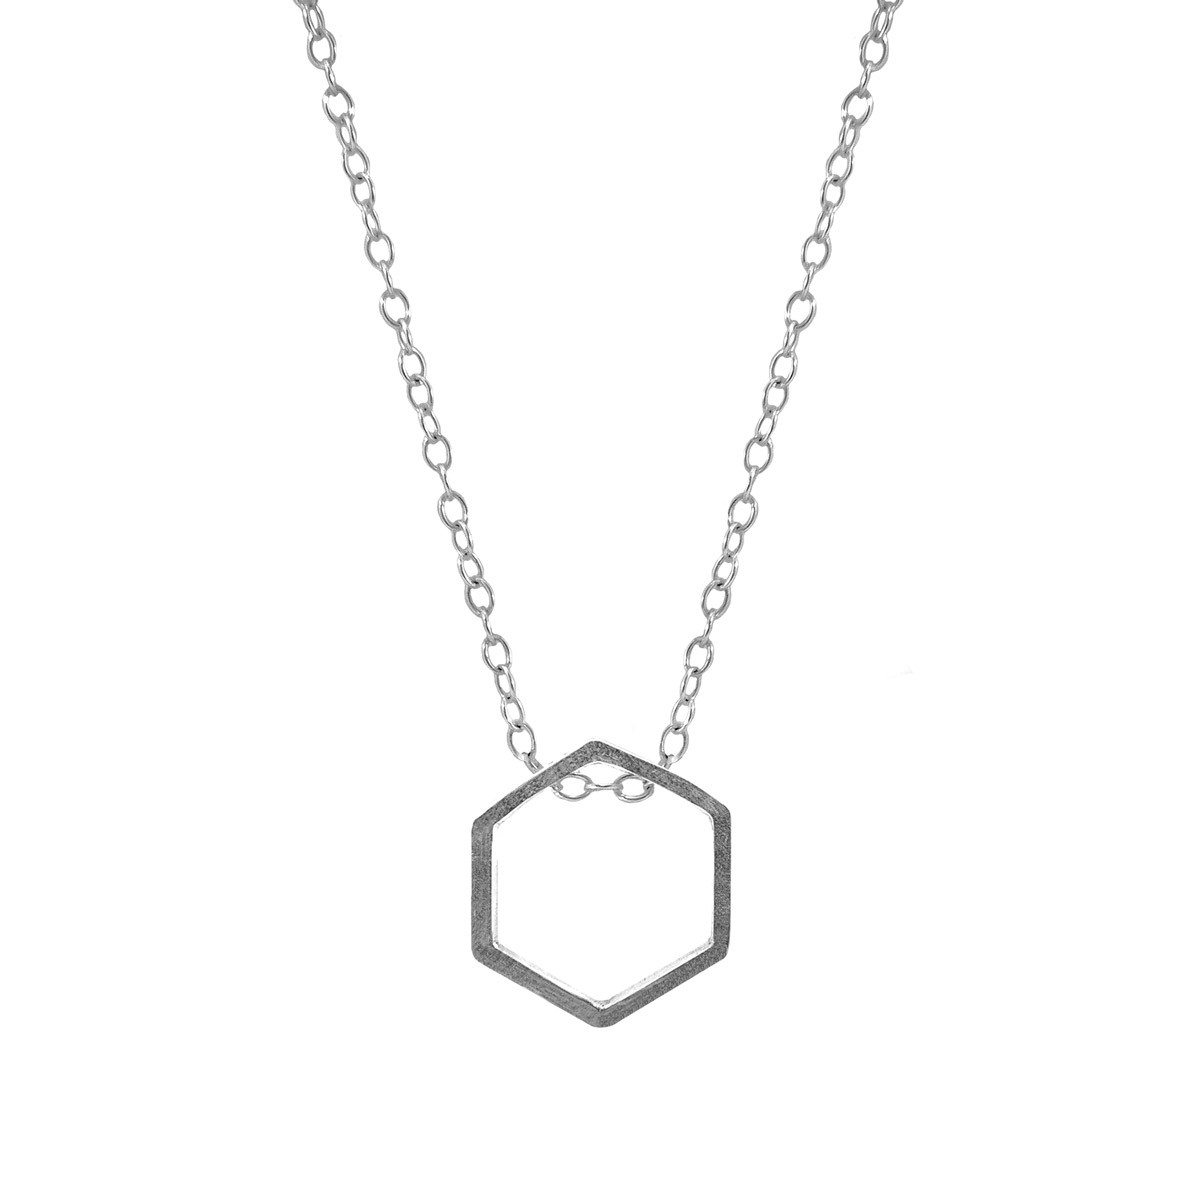 Anchor & Crew Lane Hexagonal Mini Geometric Silver Necklace Pendant